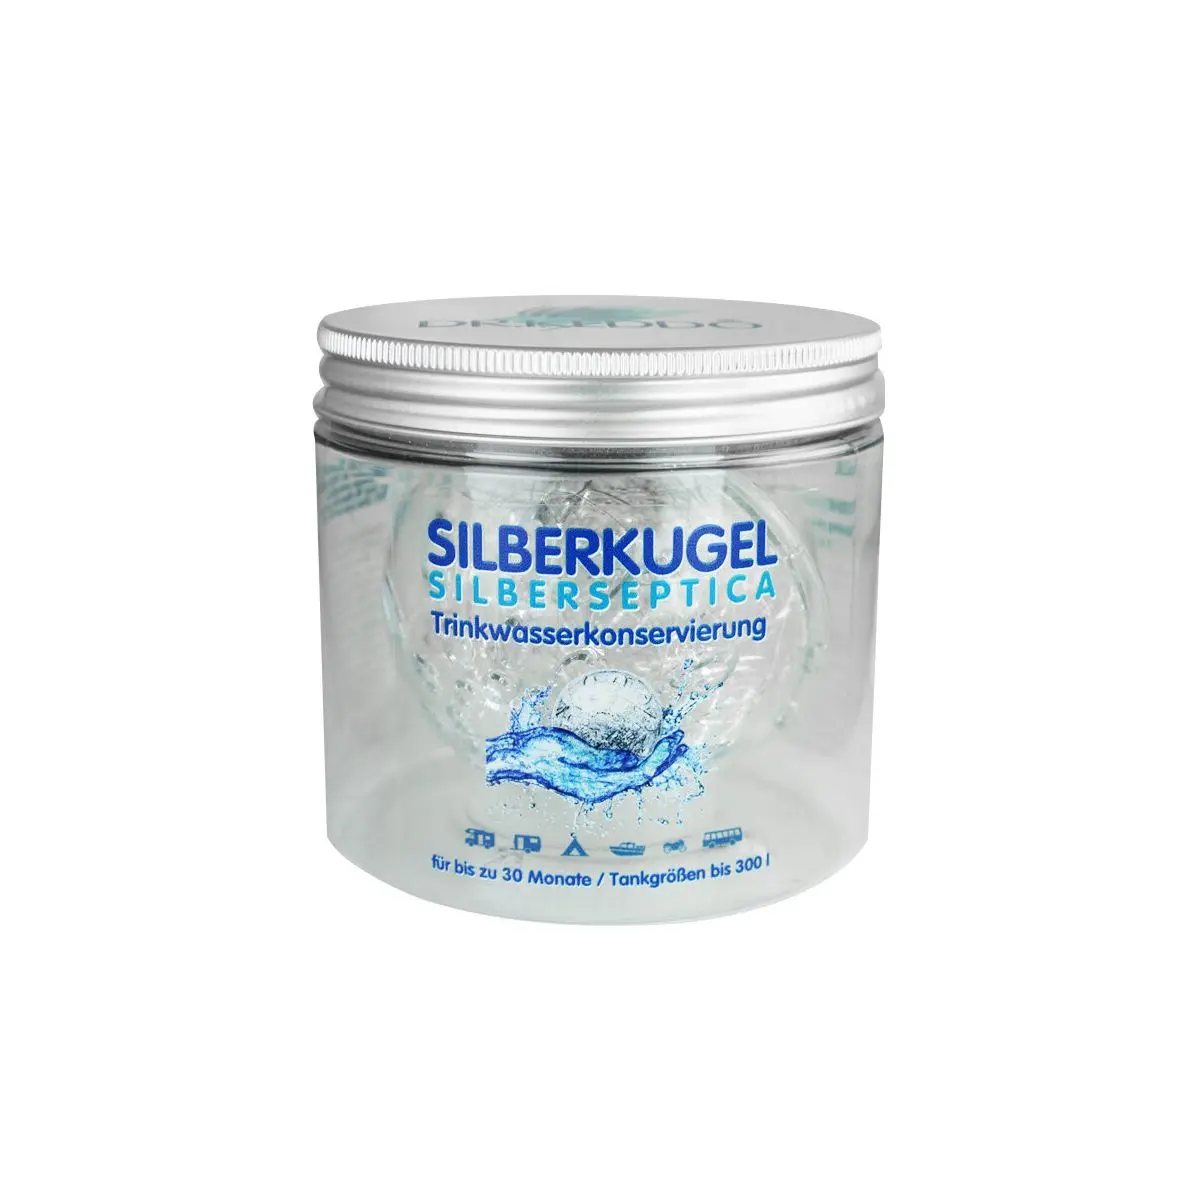 Silberkugel Silberseptica - tartály kapacitása 300 liter